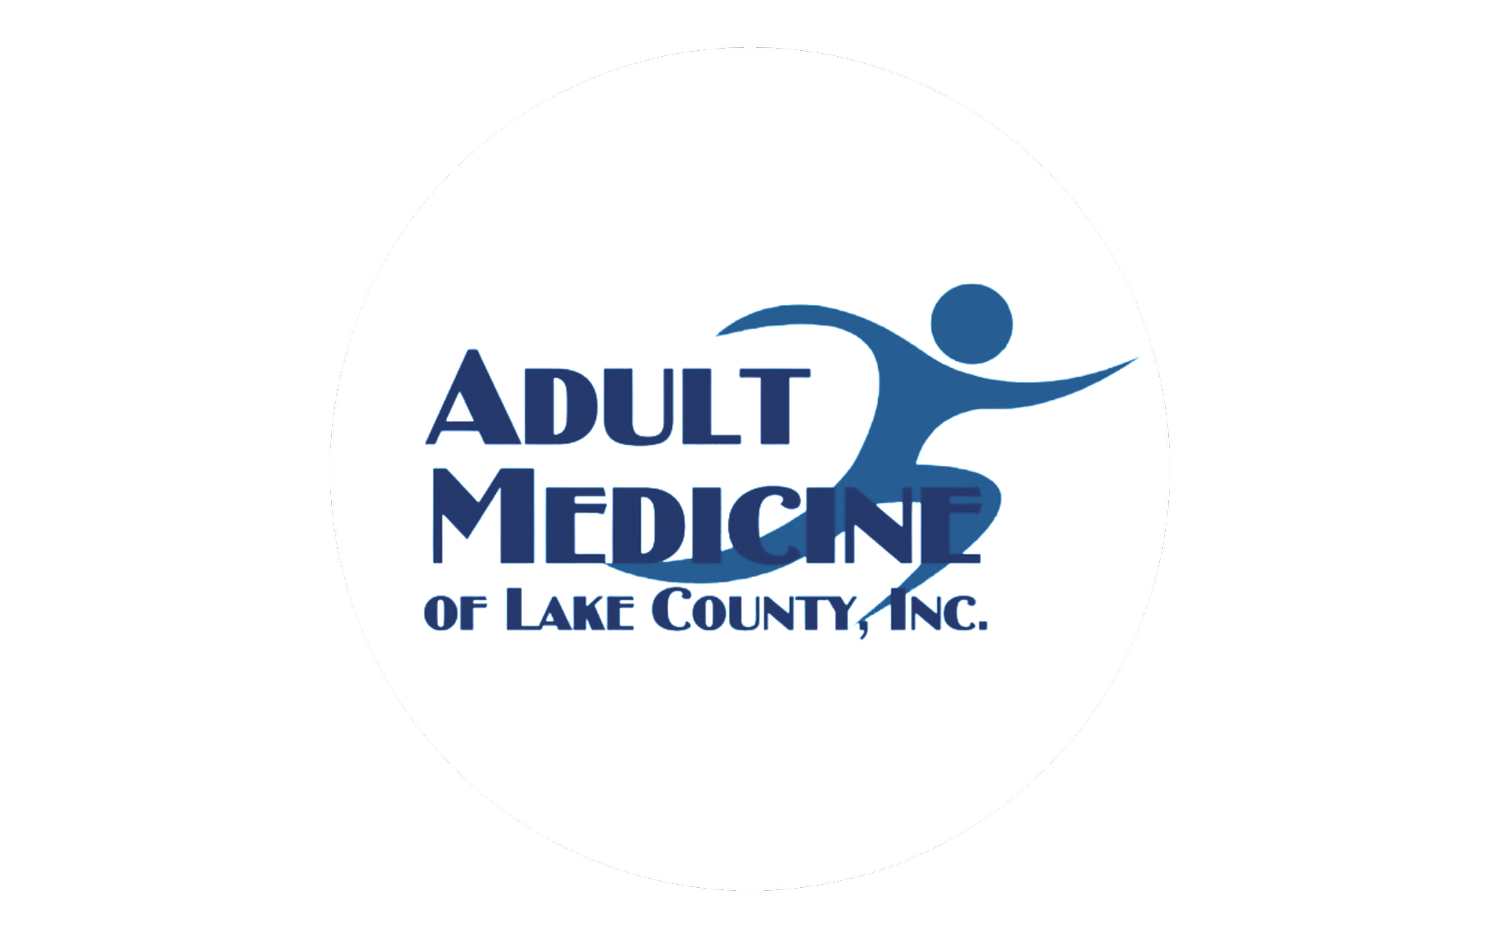 Adult Medicine of Lake County